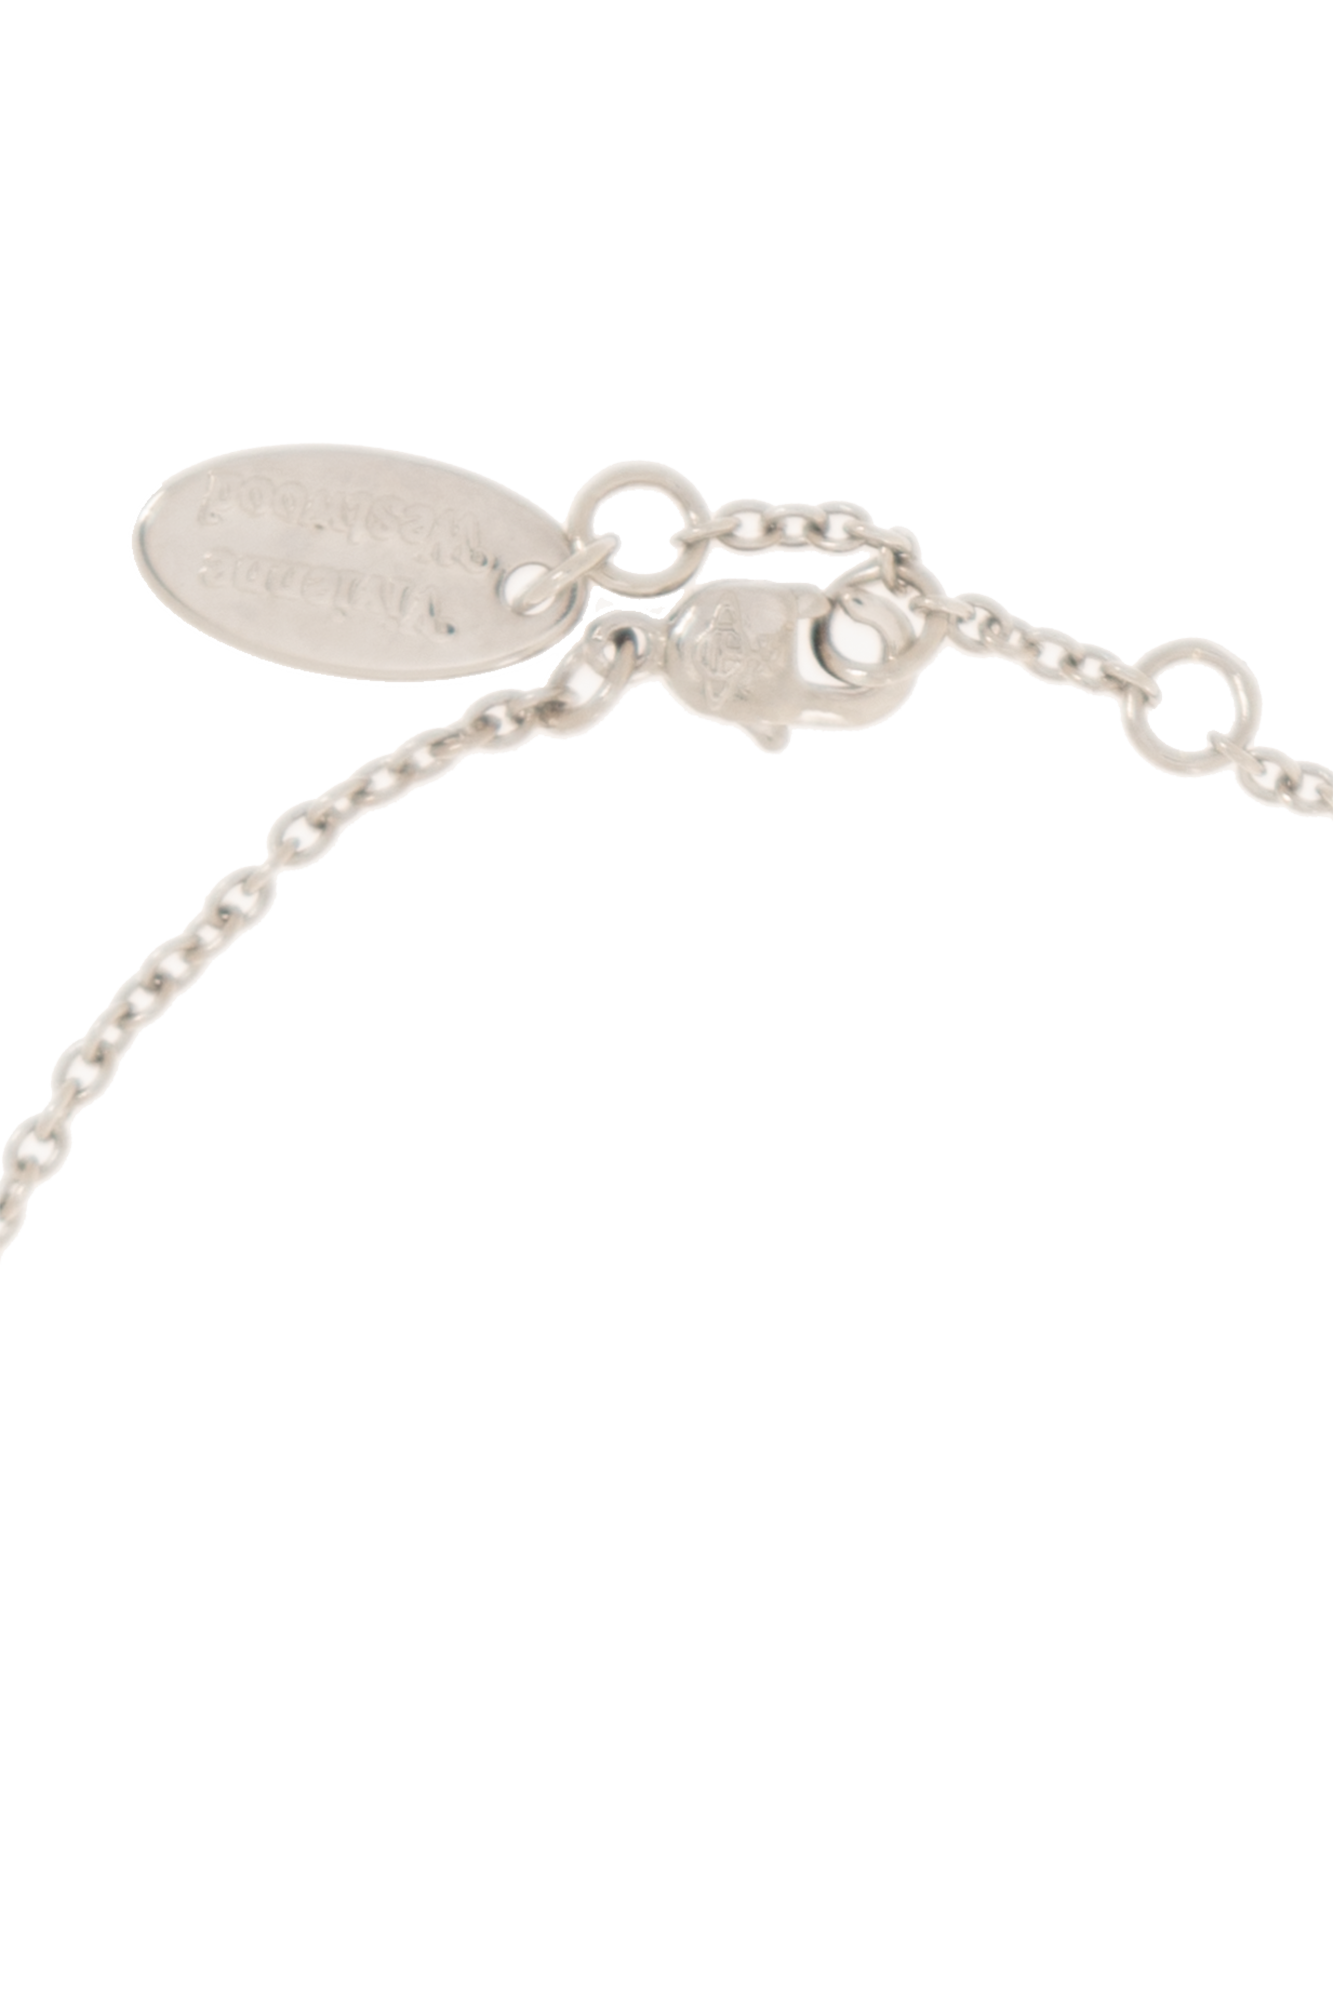 Vivienne Westwood Bracelets - OD's Jewellers